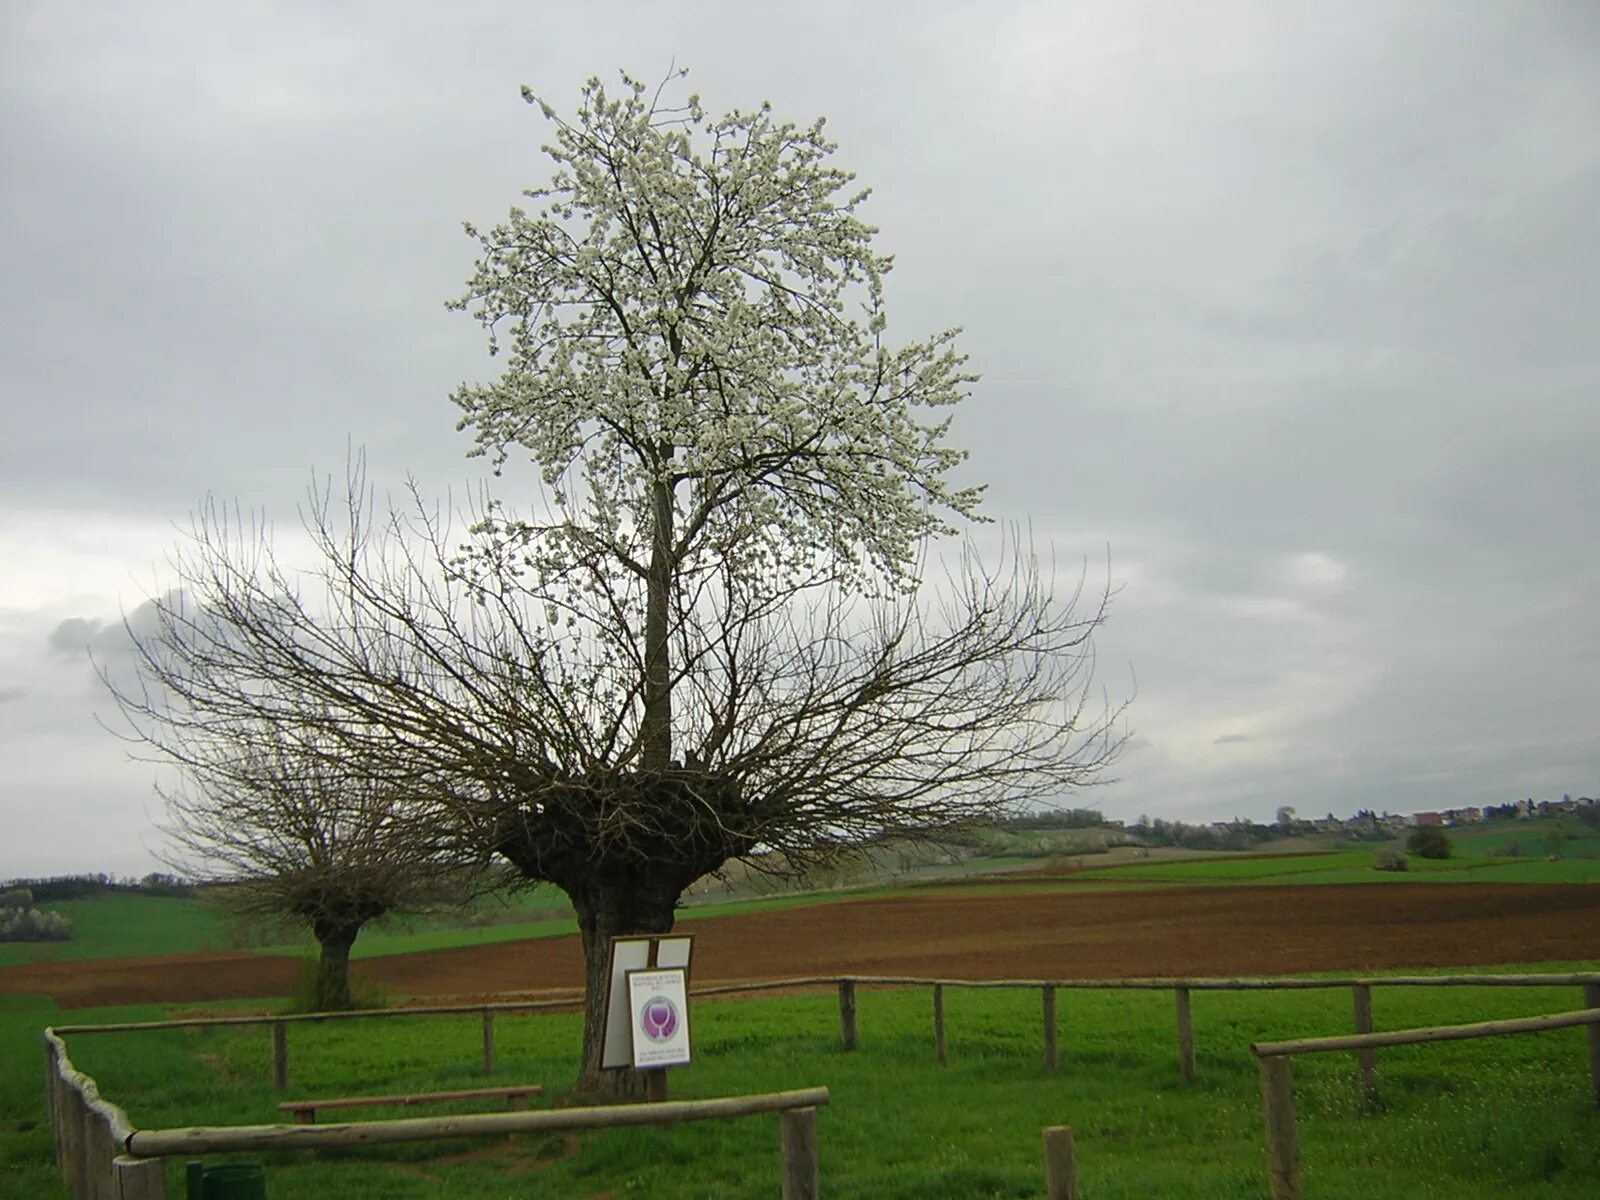 Ни дерева. Двойное дерево Касорцо. Двойное дерево в Пьемонте. Тутовое дерево в Пьемонте. Двойное дерево в Италии.